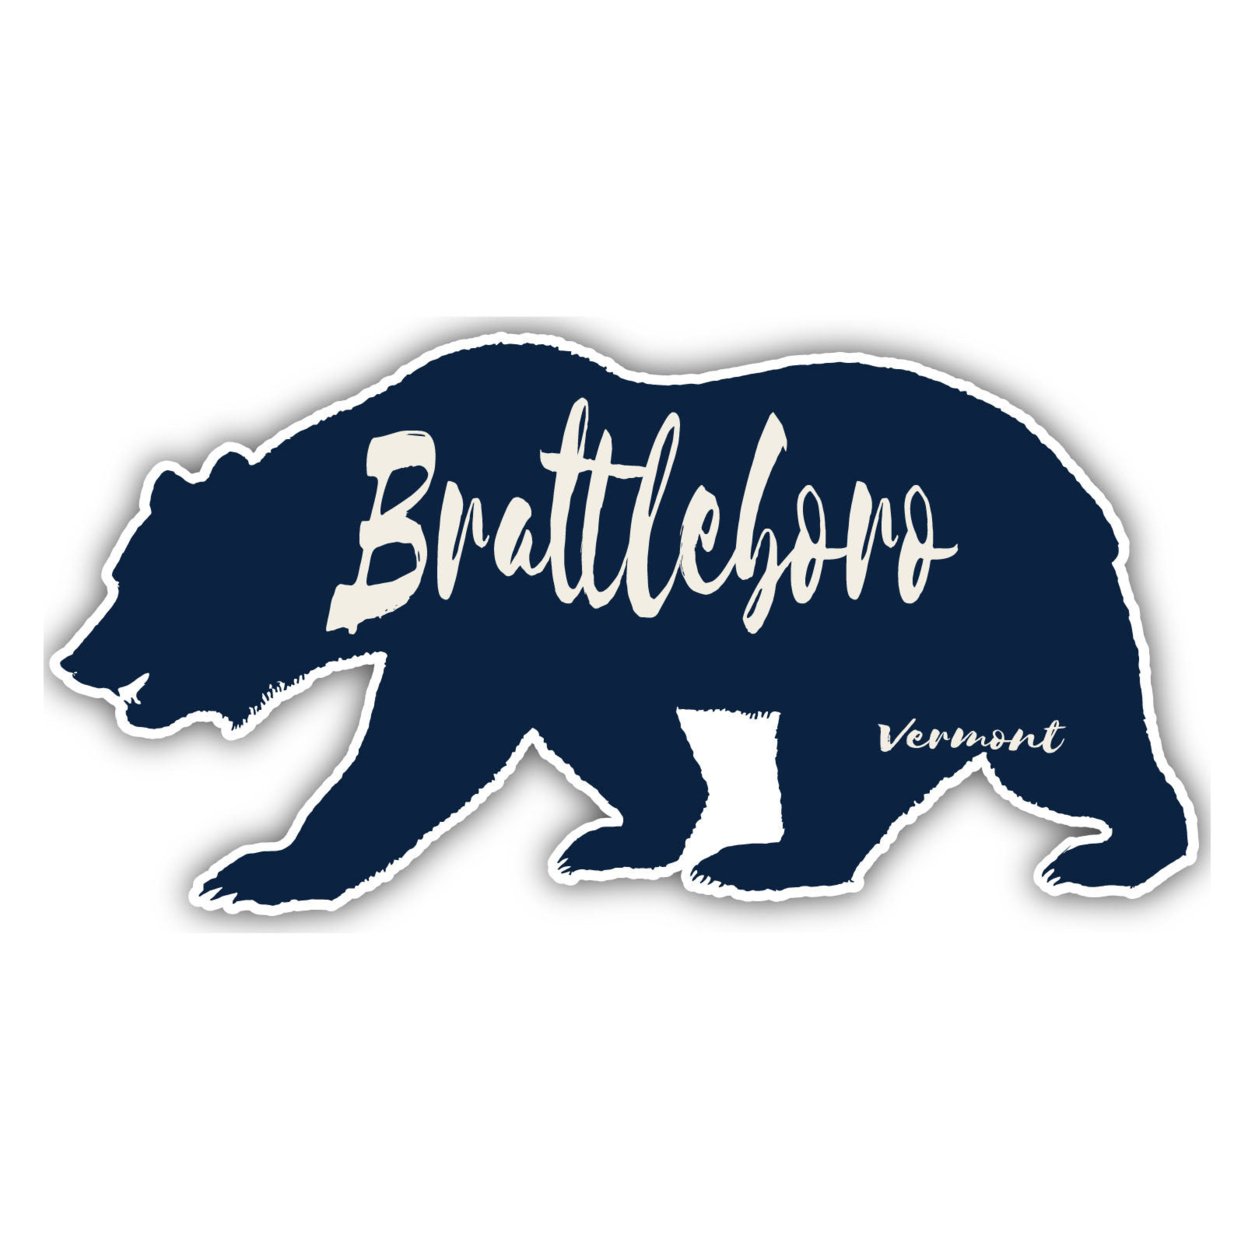 Brattleboro Vermont Souvenir Decorative Stickers (Choose Theme And Size) - 4-Pack, 8-Inch, Bear